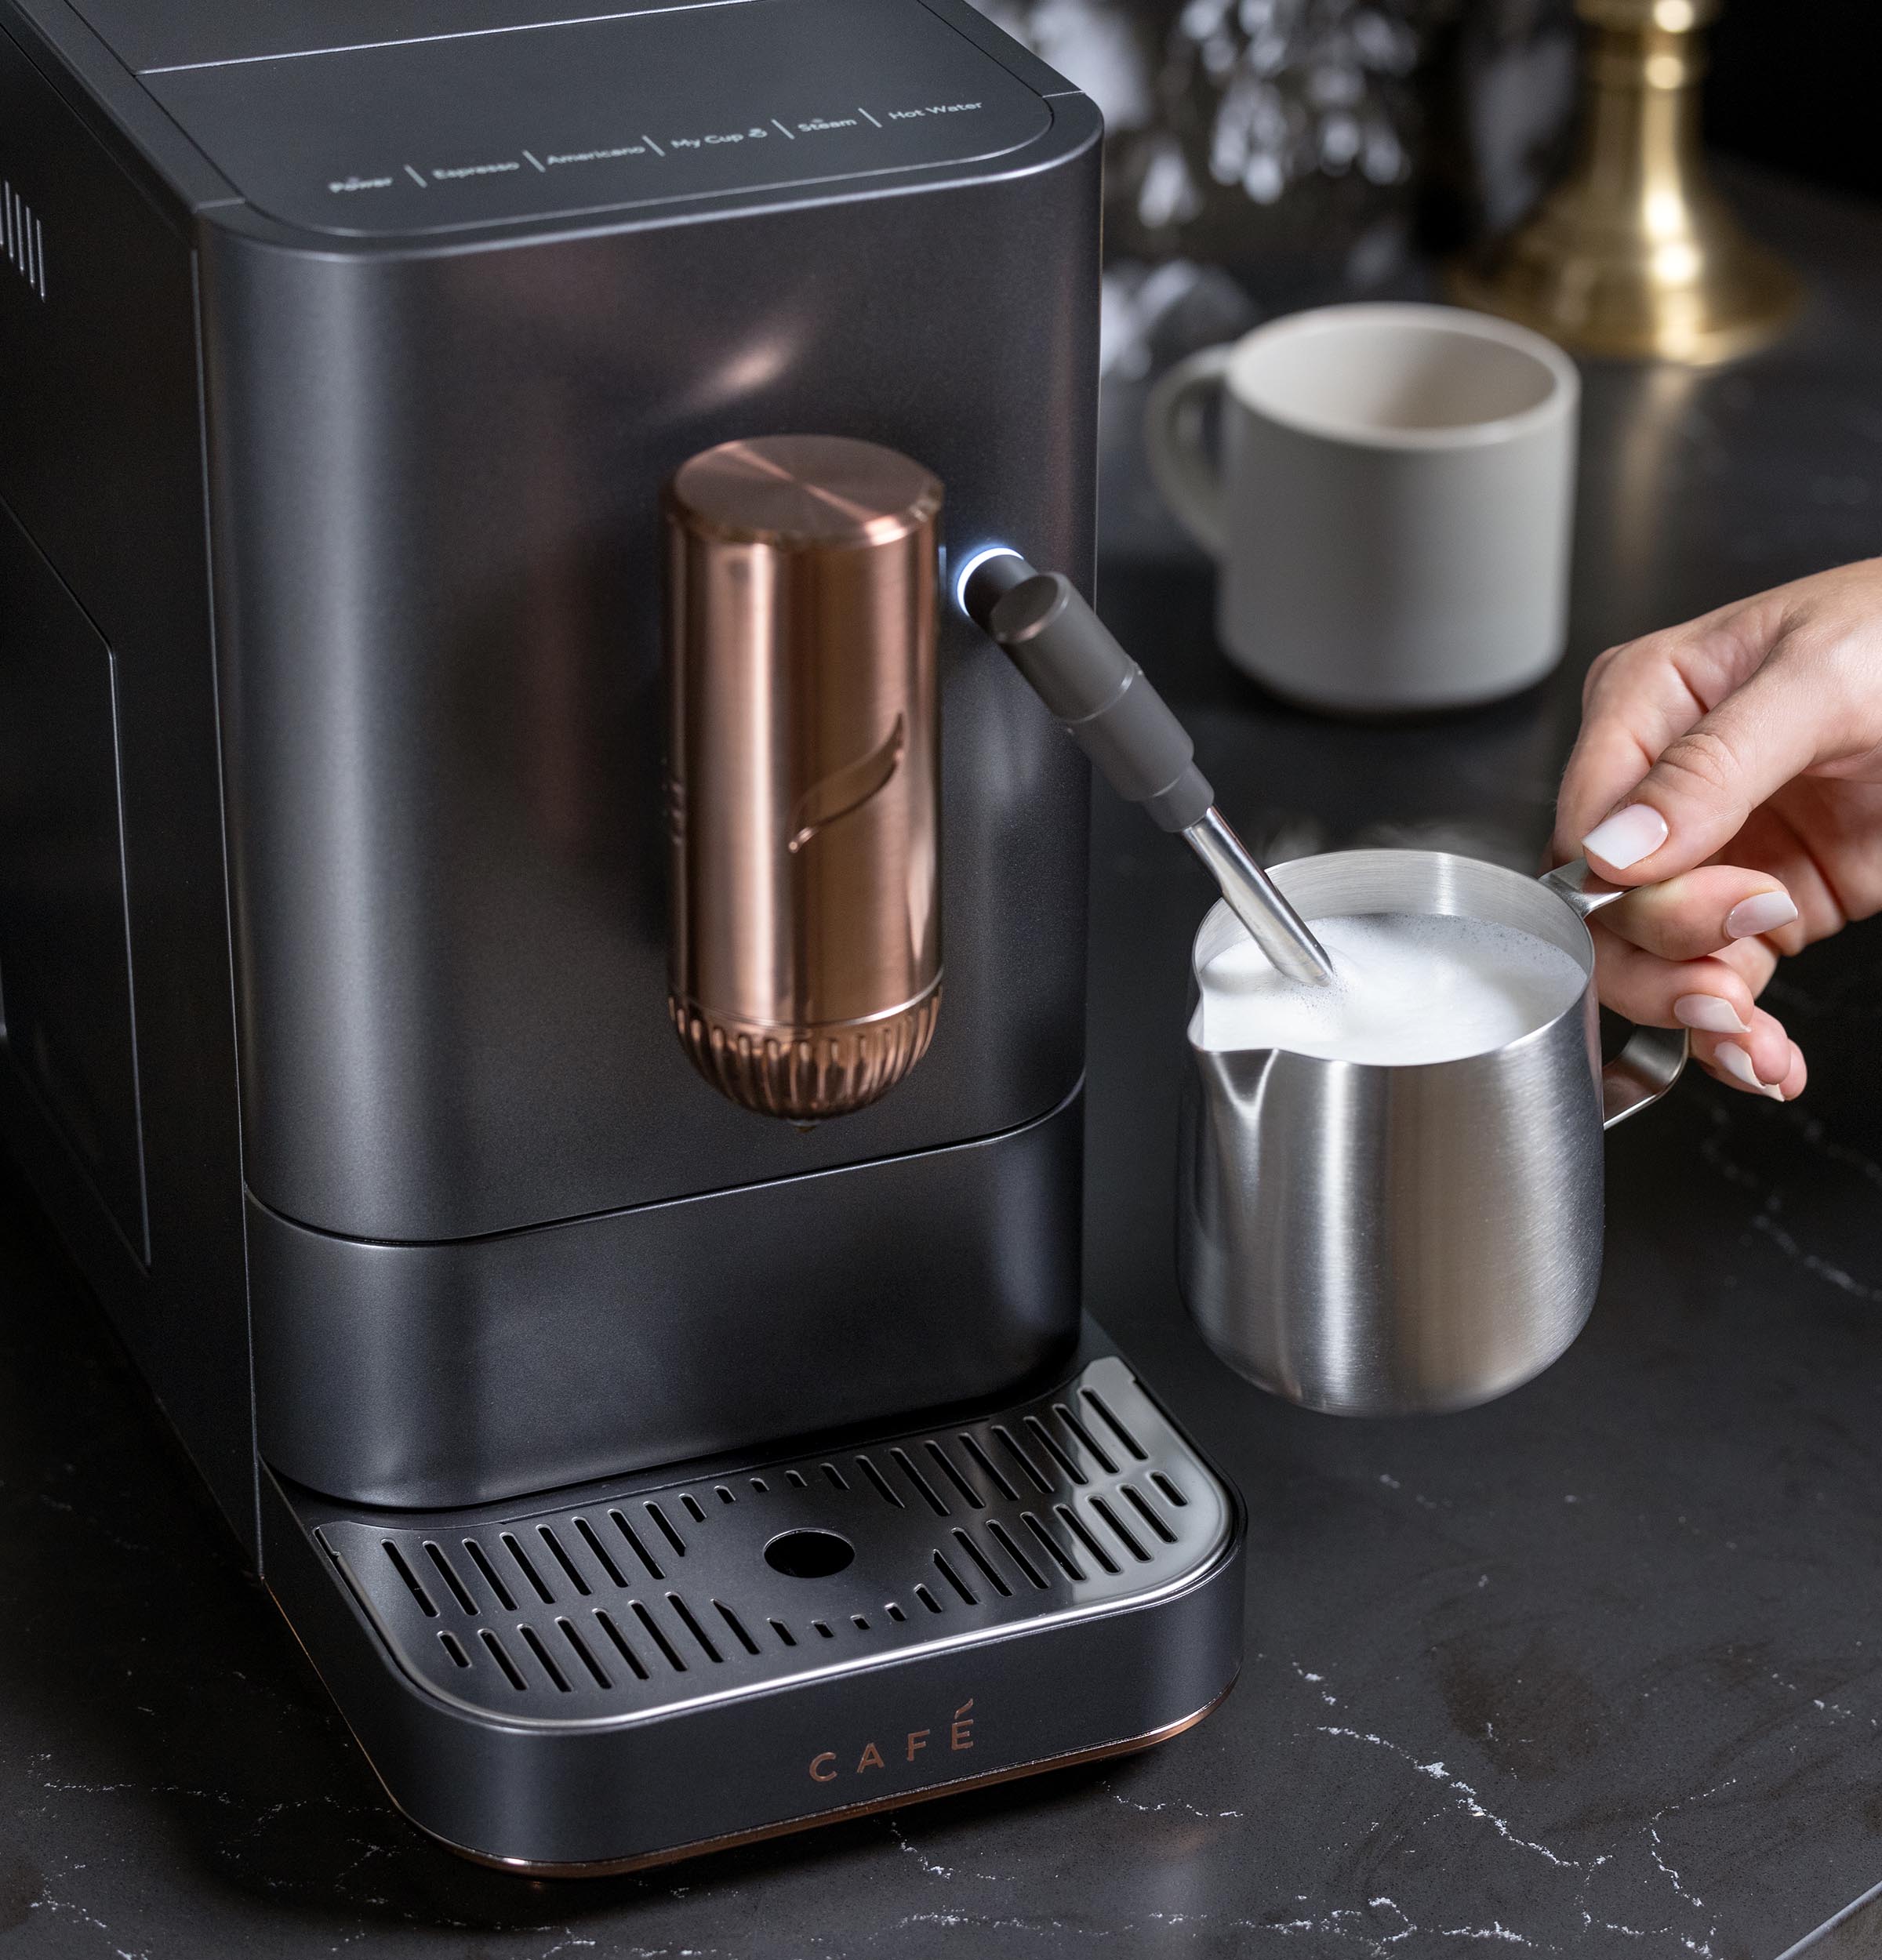 CYETUS Espresso Machine 20 Bar with Milk Frother Steam Wand, Compact Small  Coffee Machine for Home, Pressure Gauge, Barista Espresso Maker Latte